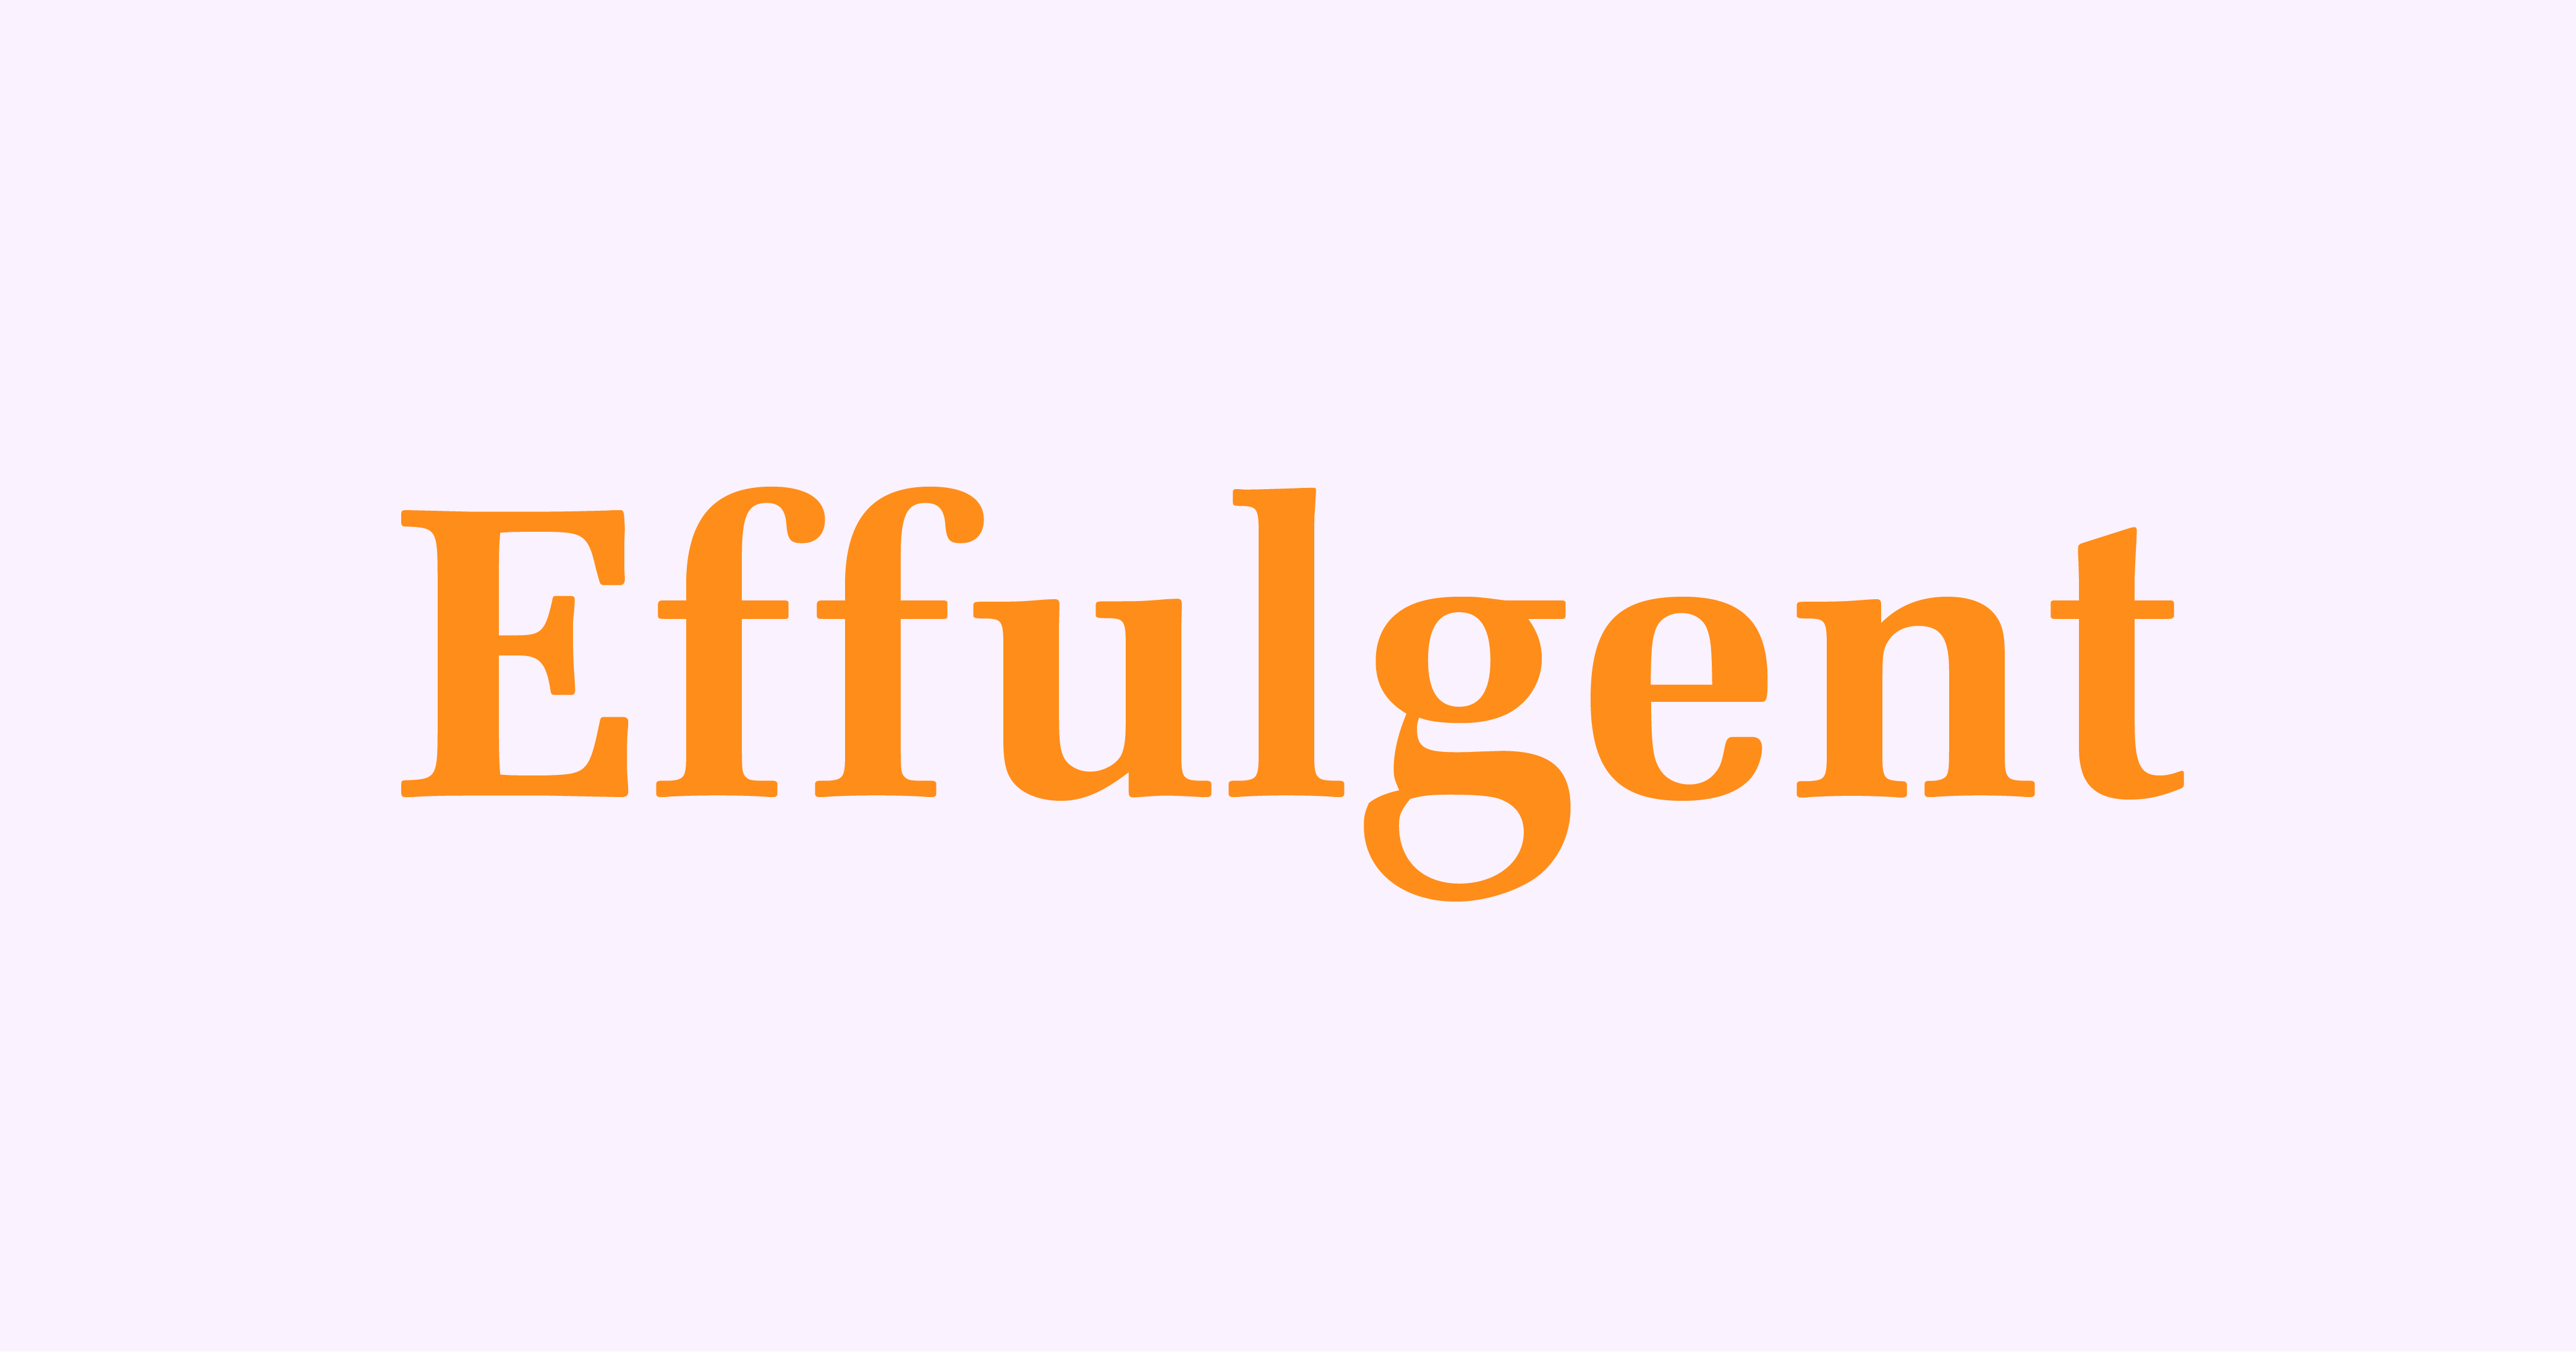 Effulgent